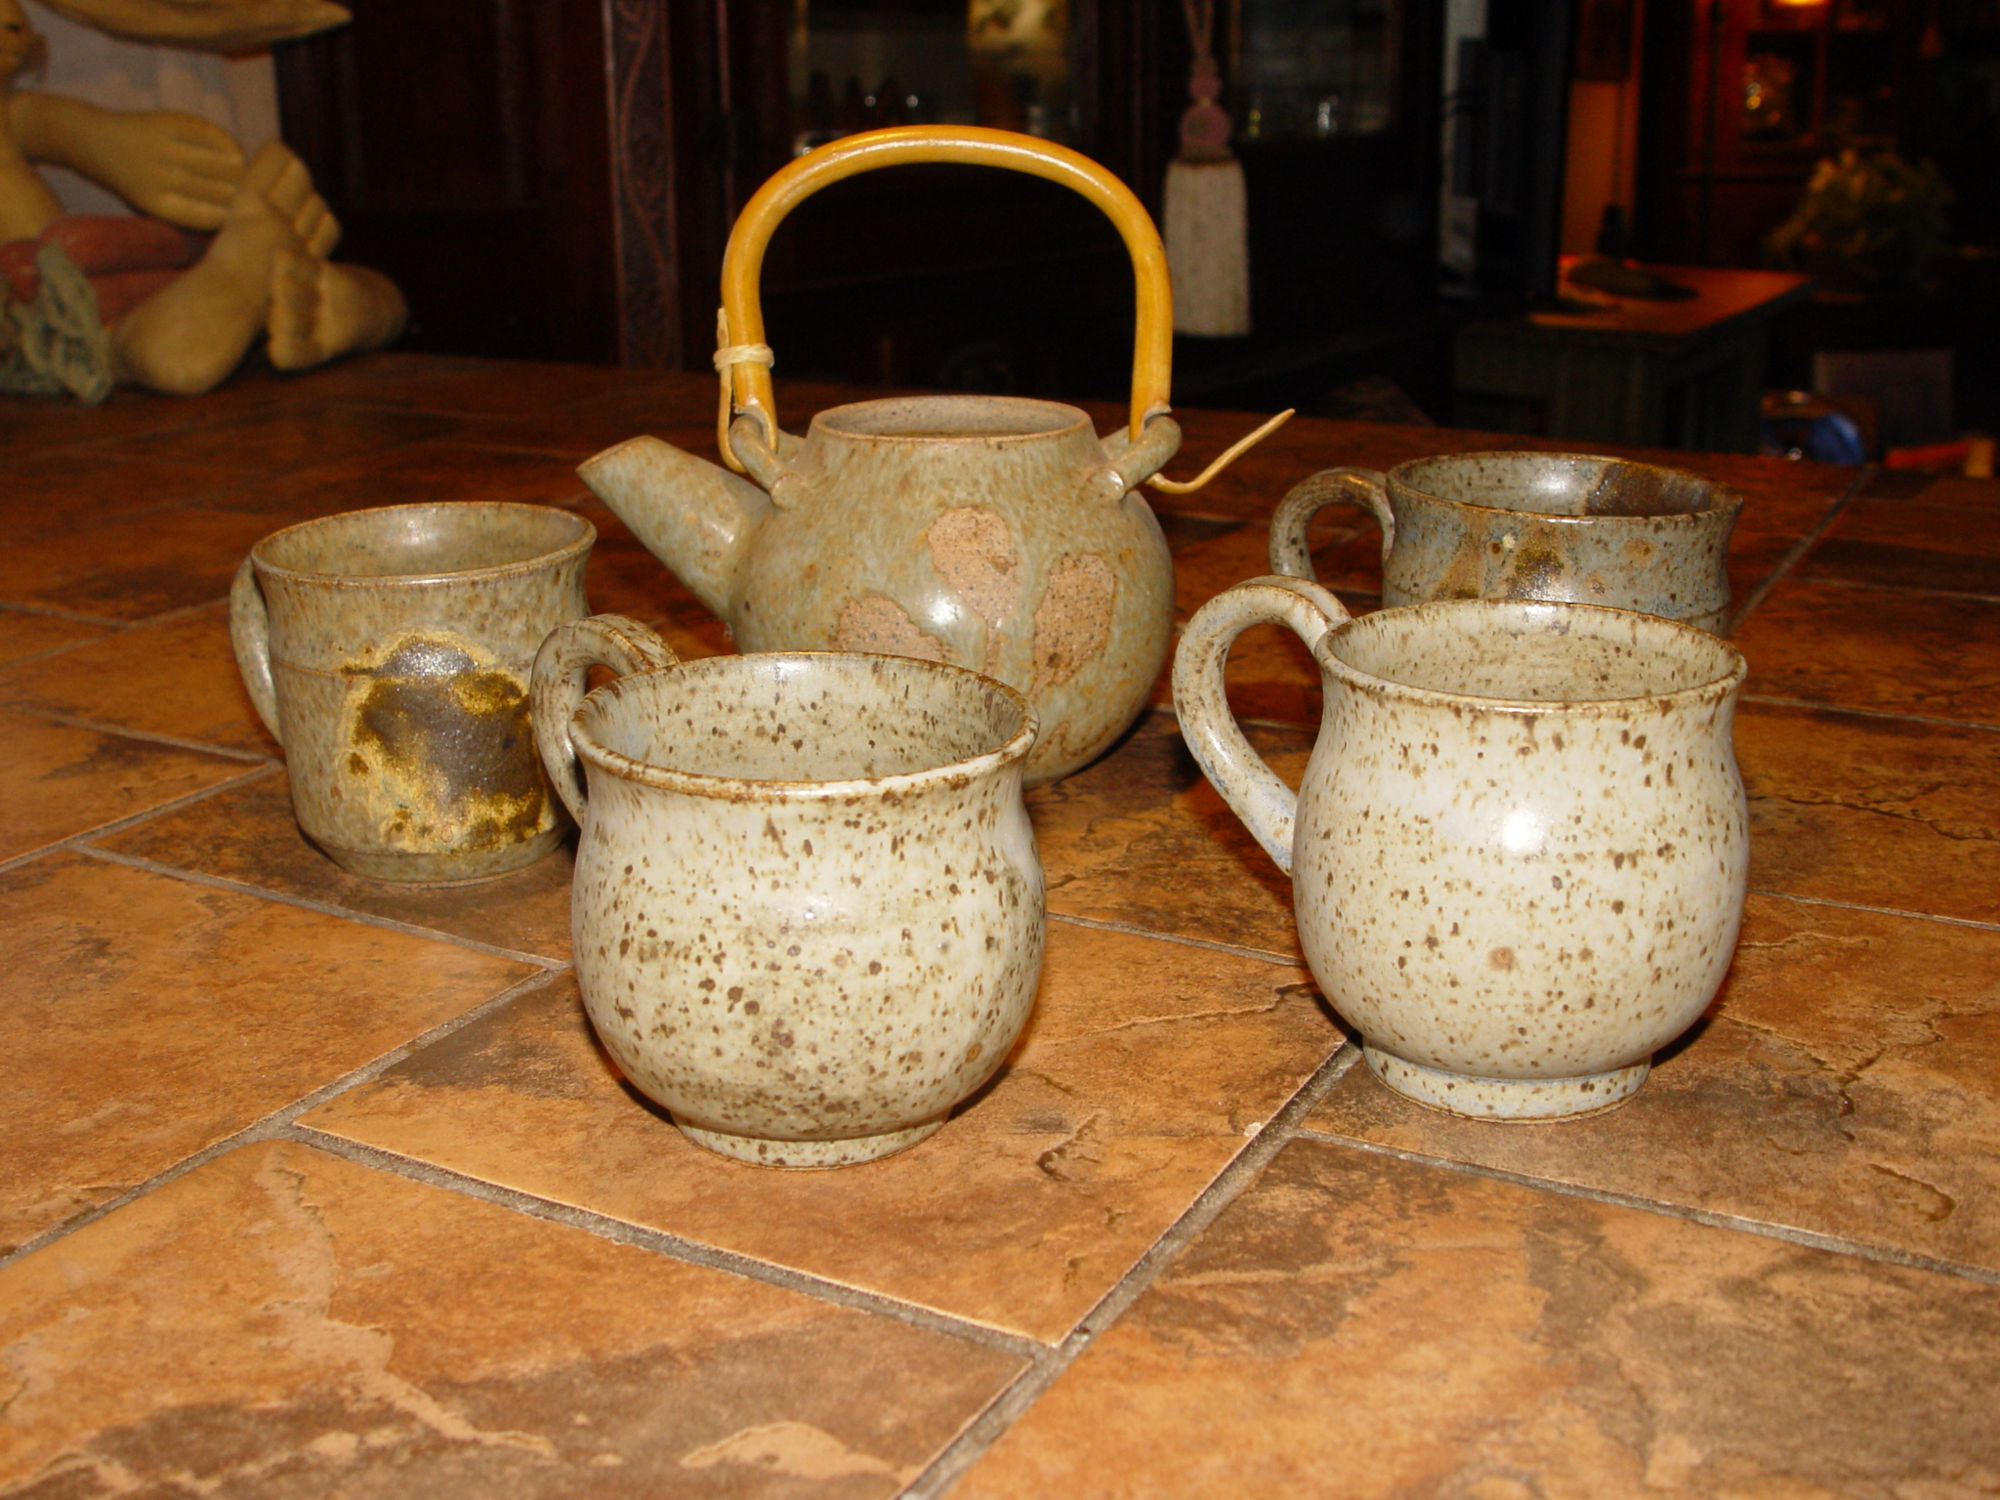 Vintage studio earthy
                                        ceramic teapot set with cane
                                        handle, impressed chop mark